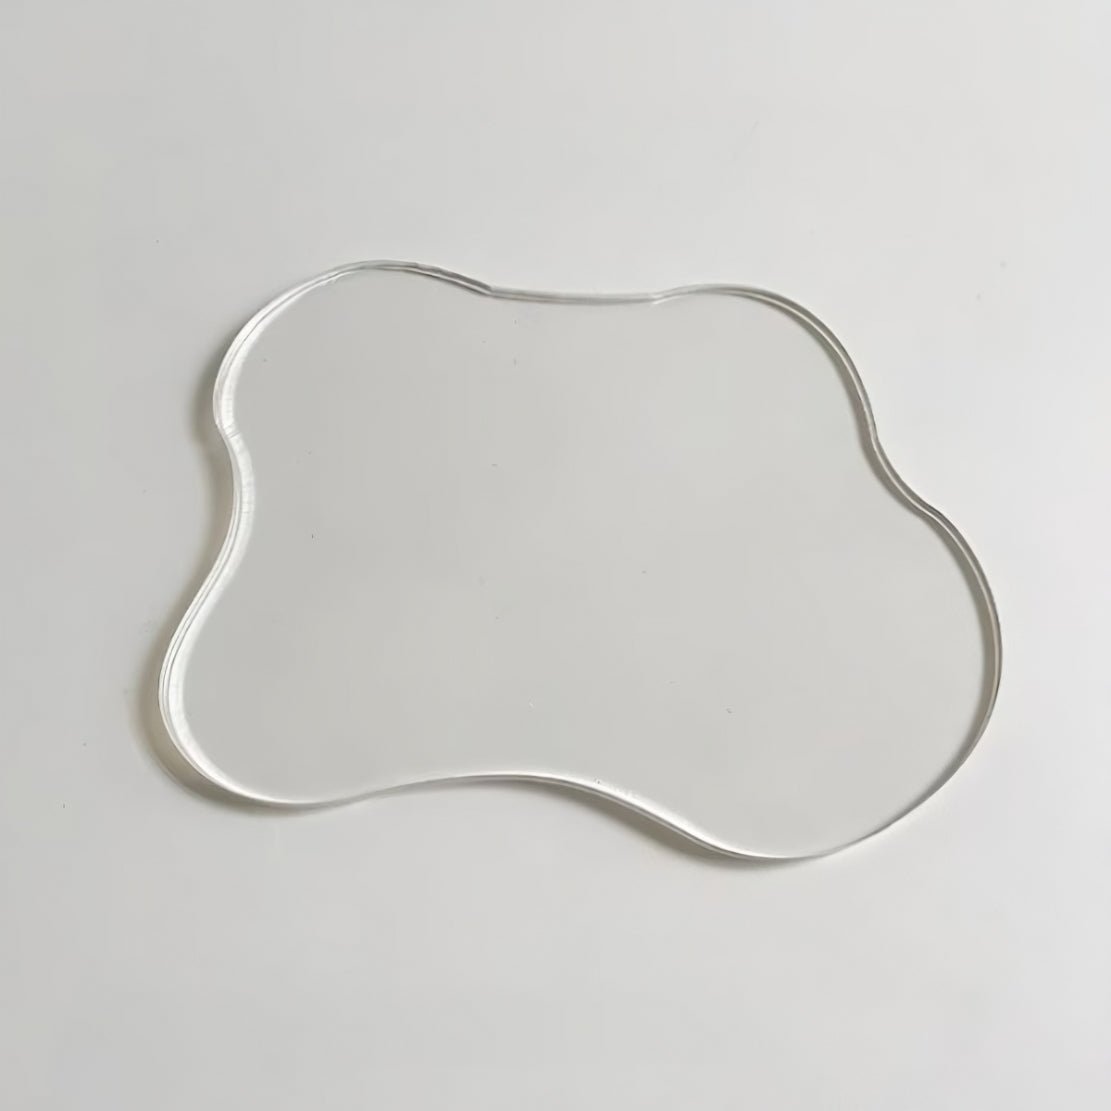 Clear acrylic asymmetrical tray coaster